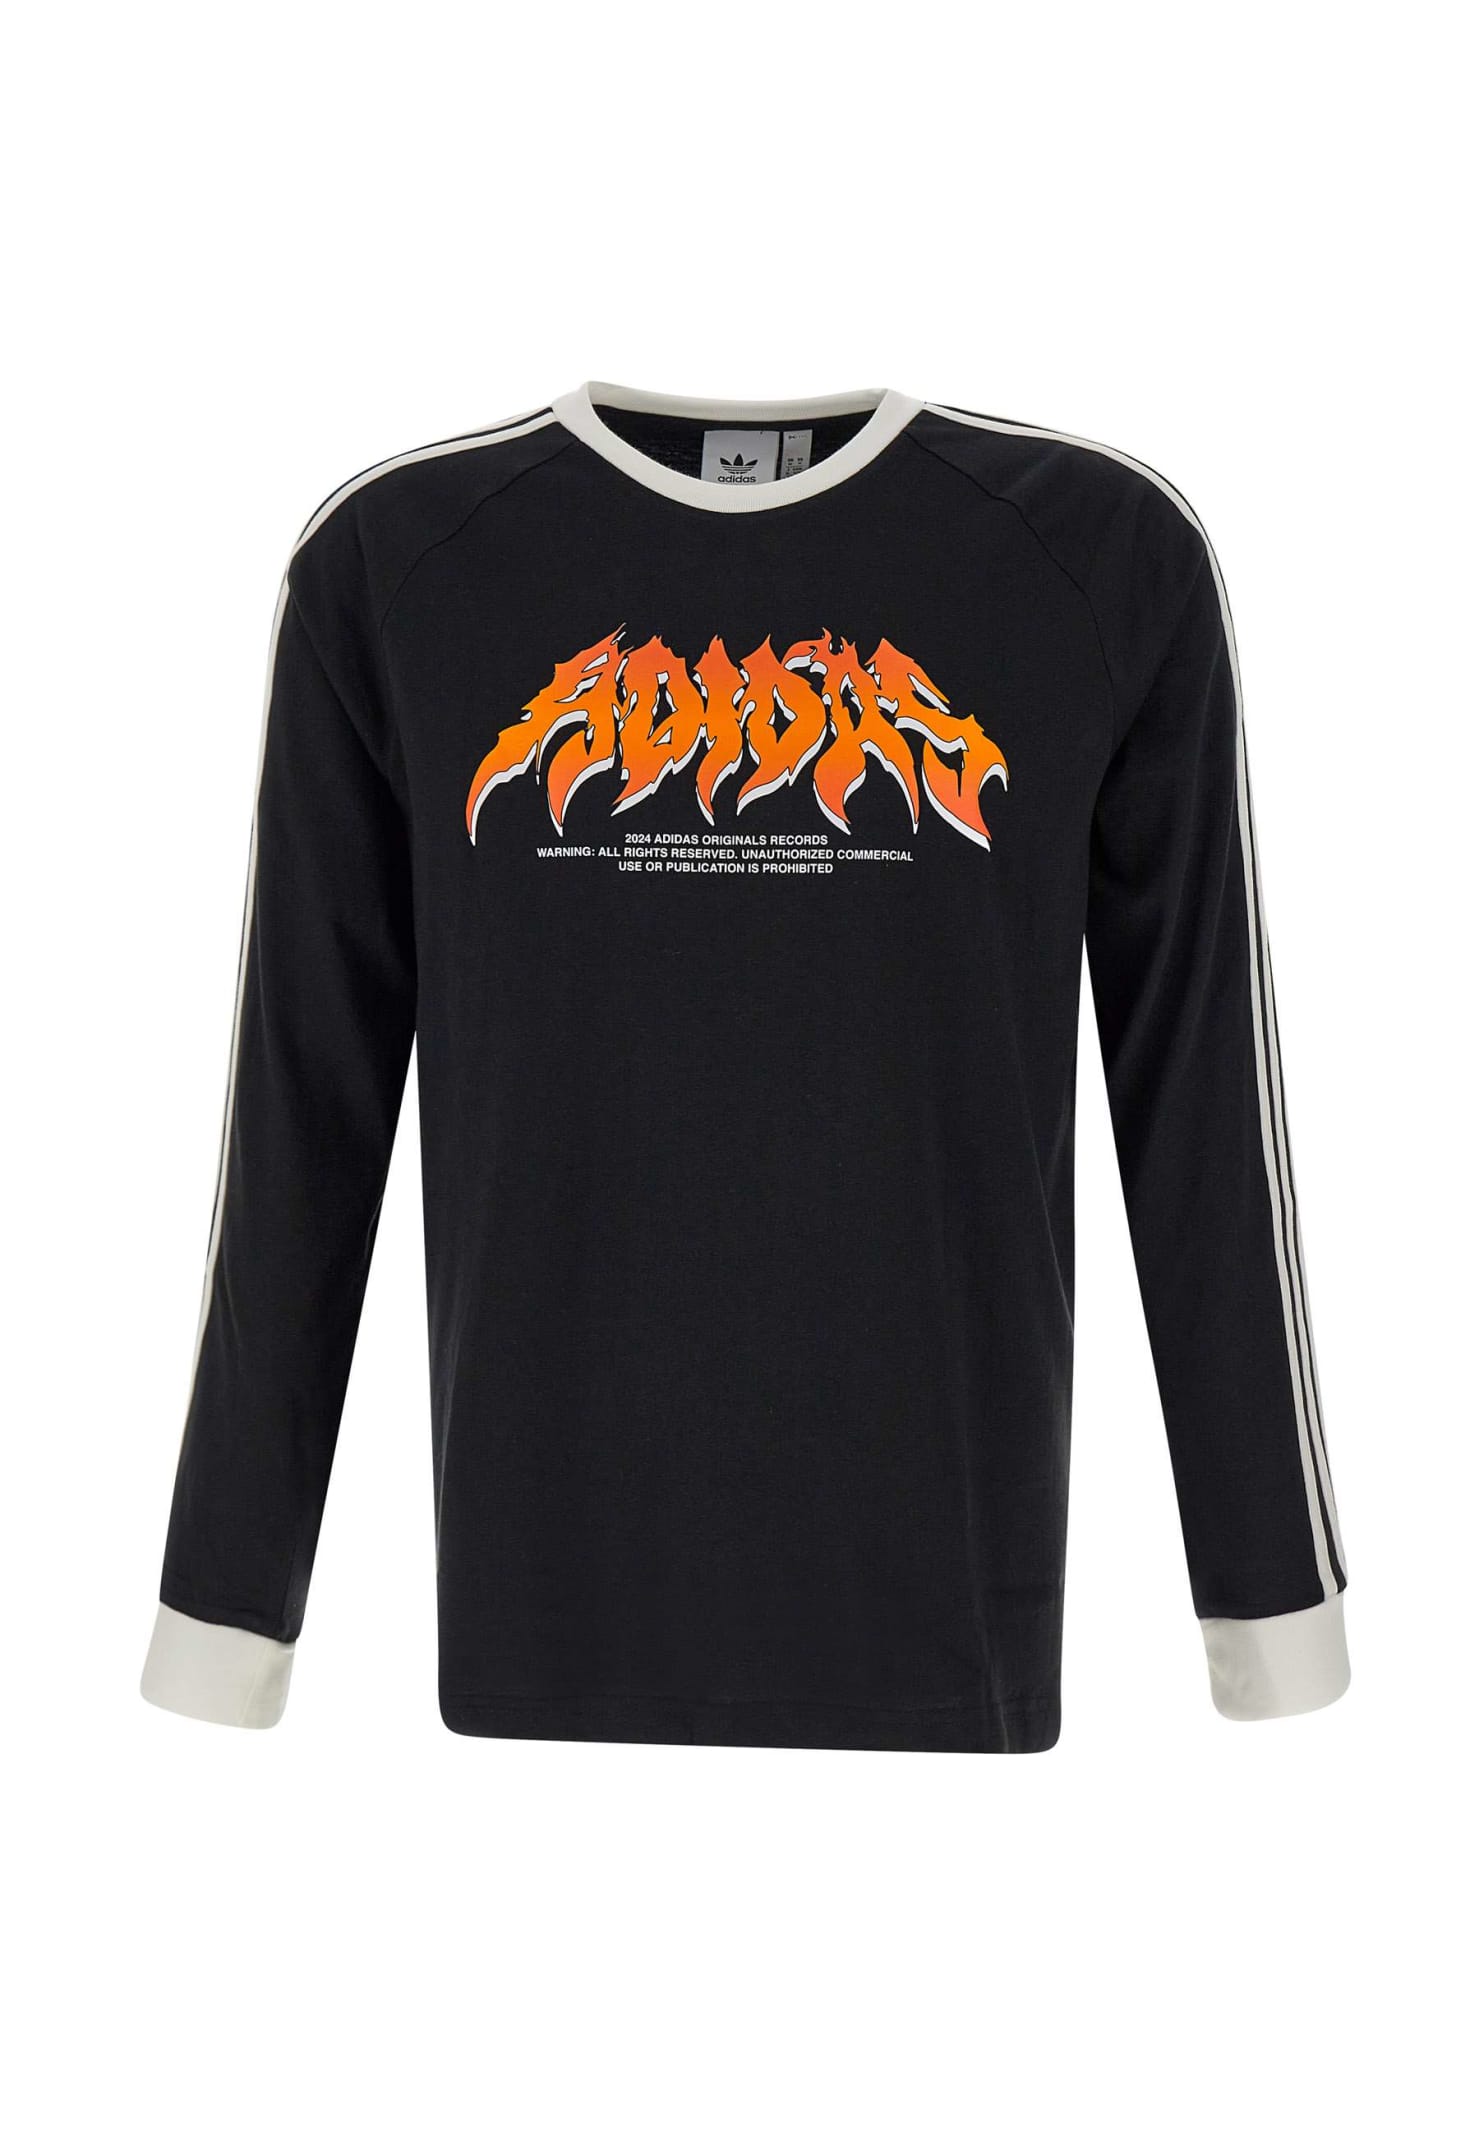 Adidas Originals Flames Cotton Sweater In Metallic